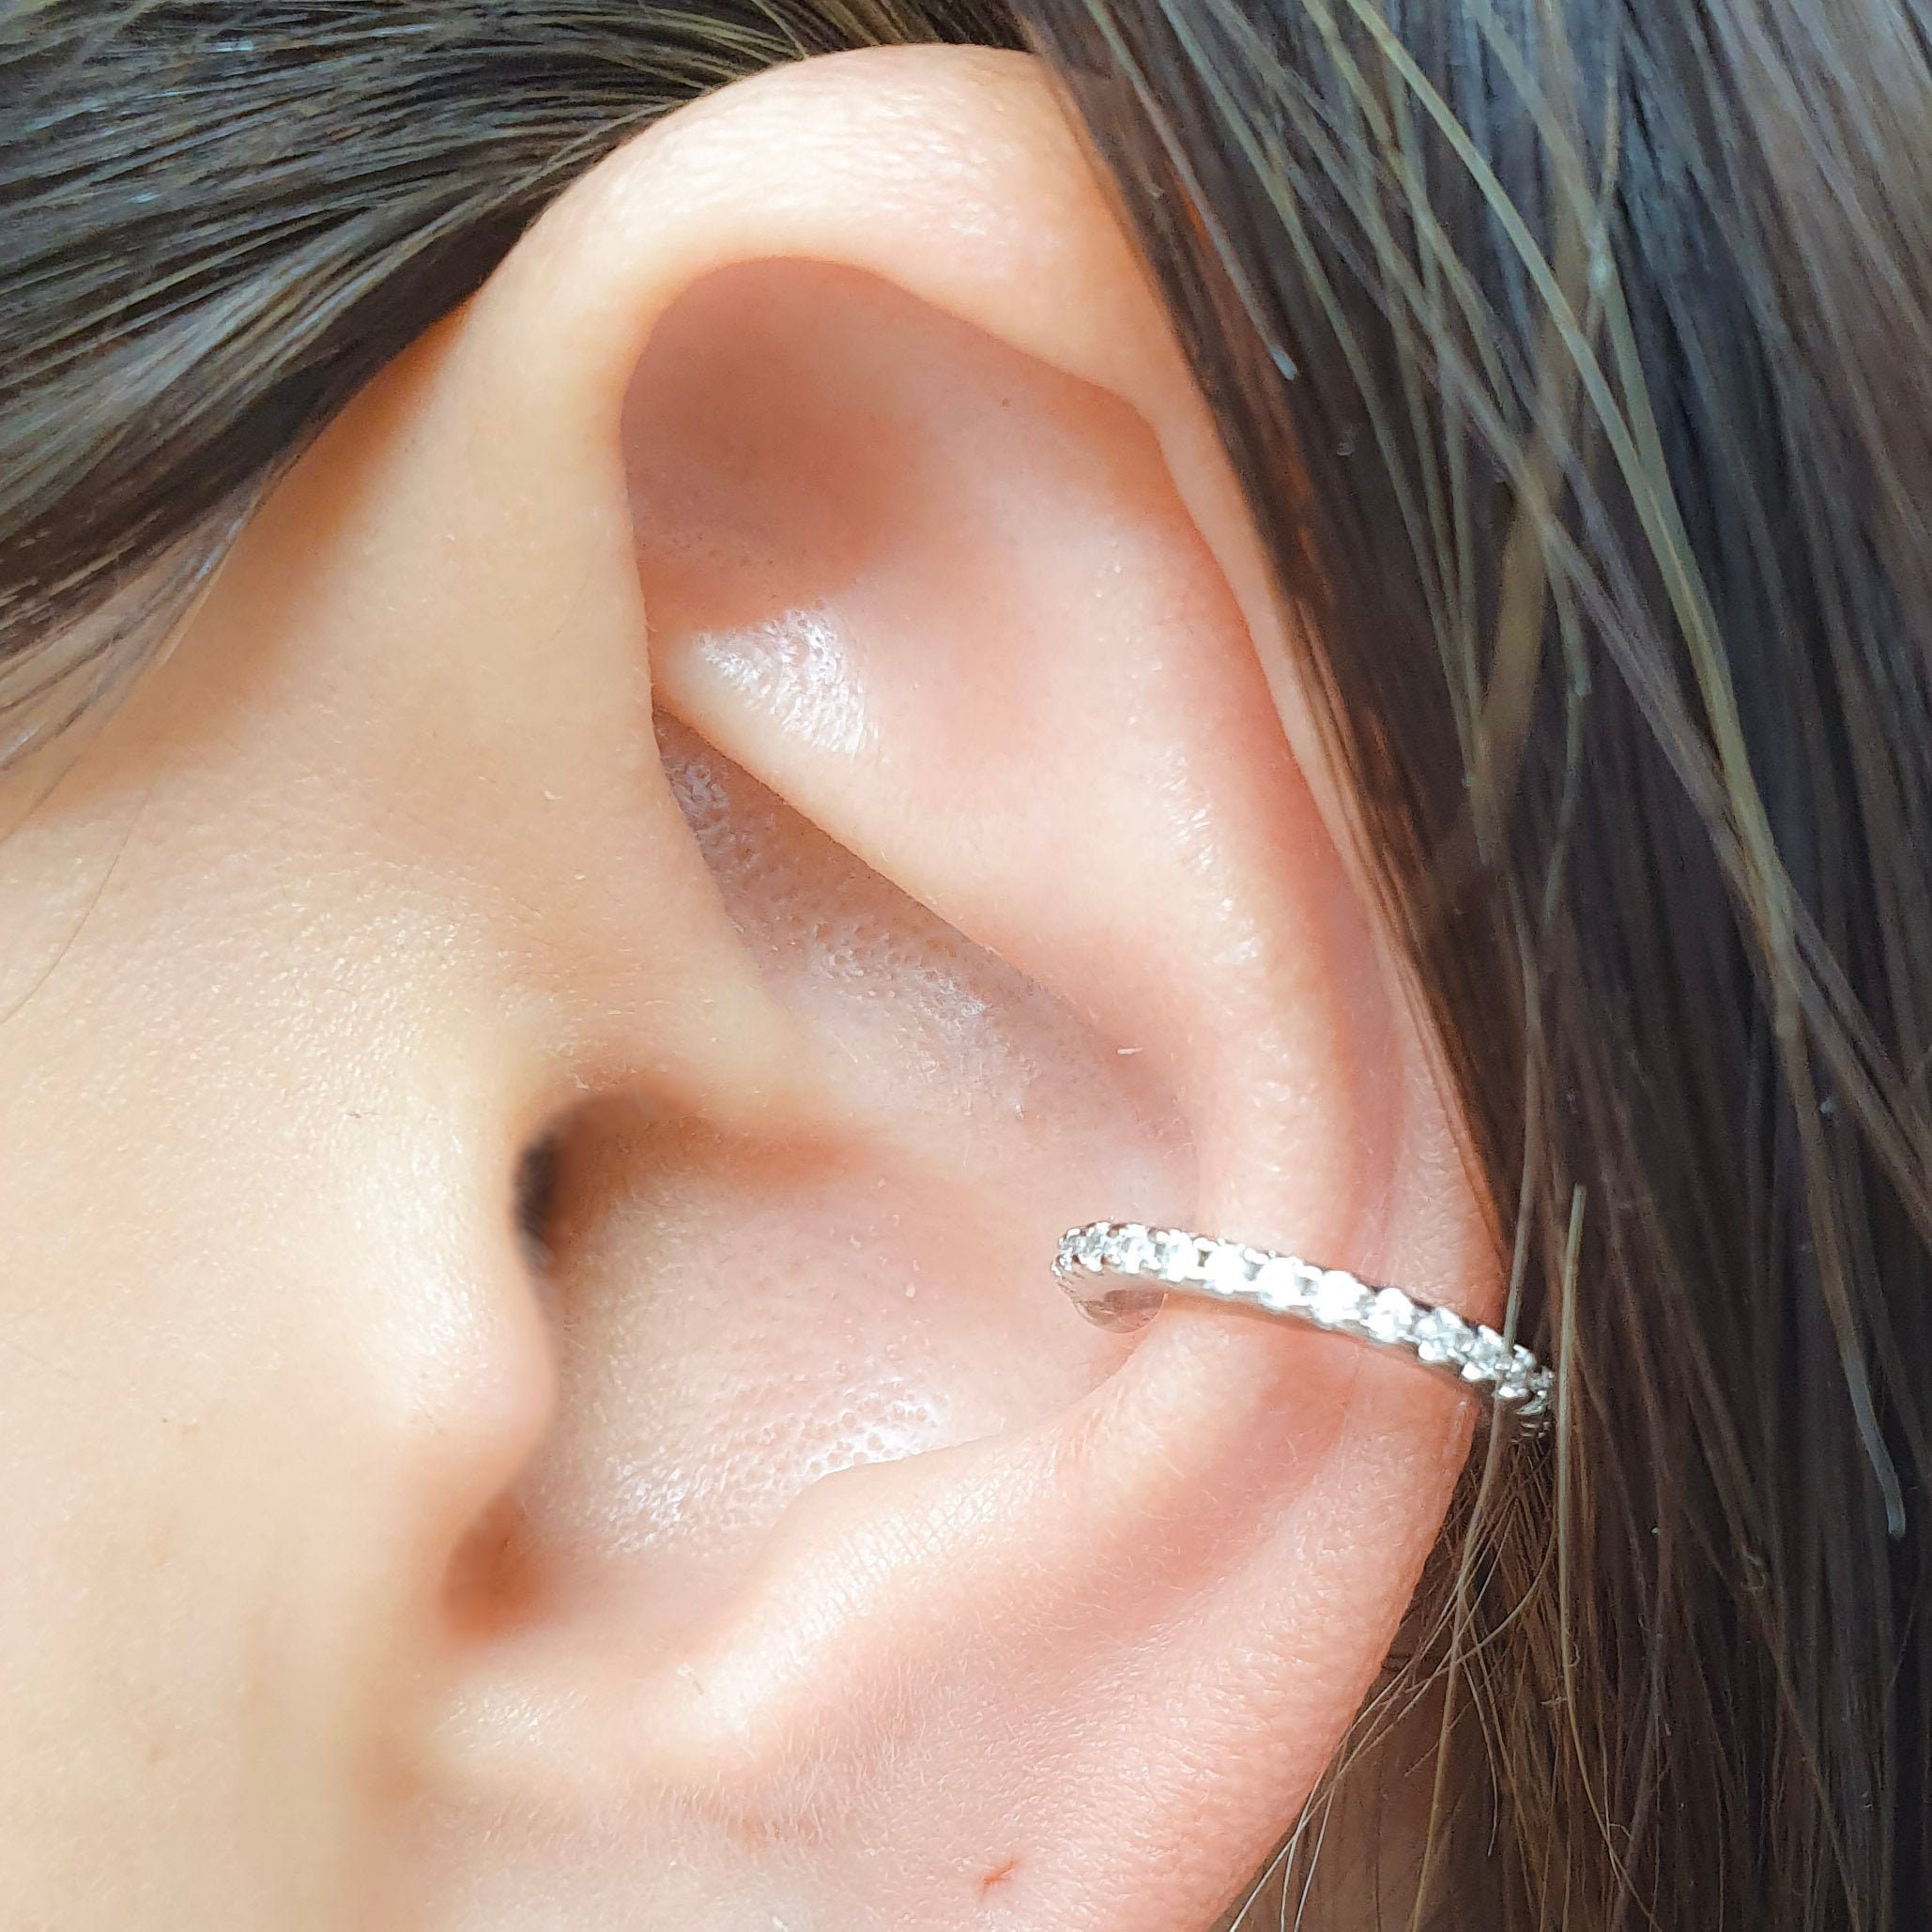 14k Gold Filled Ear Cuff Tiny CZ Diamonds Conch Earring Fake Faux No Piercing 